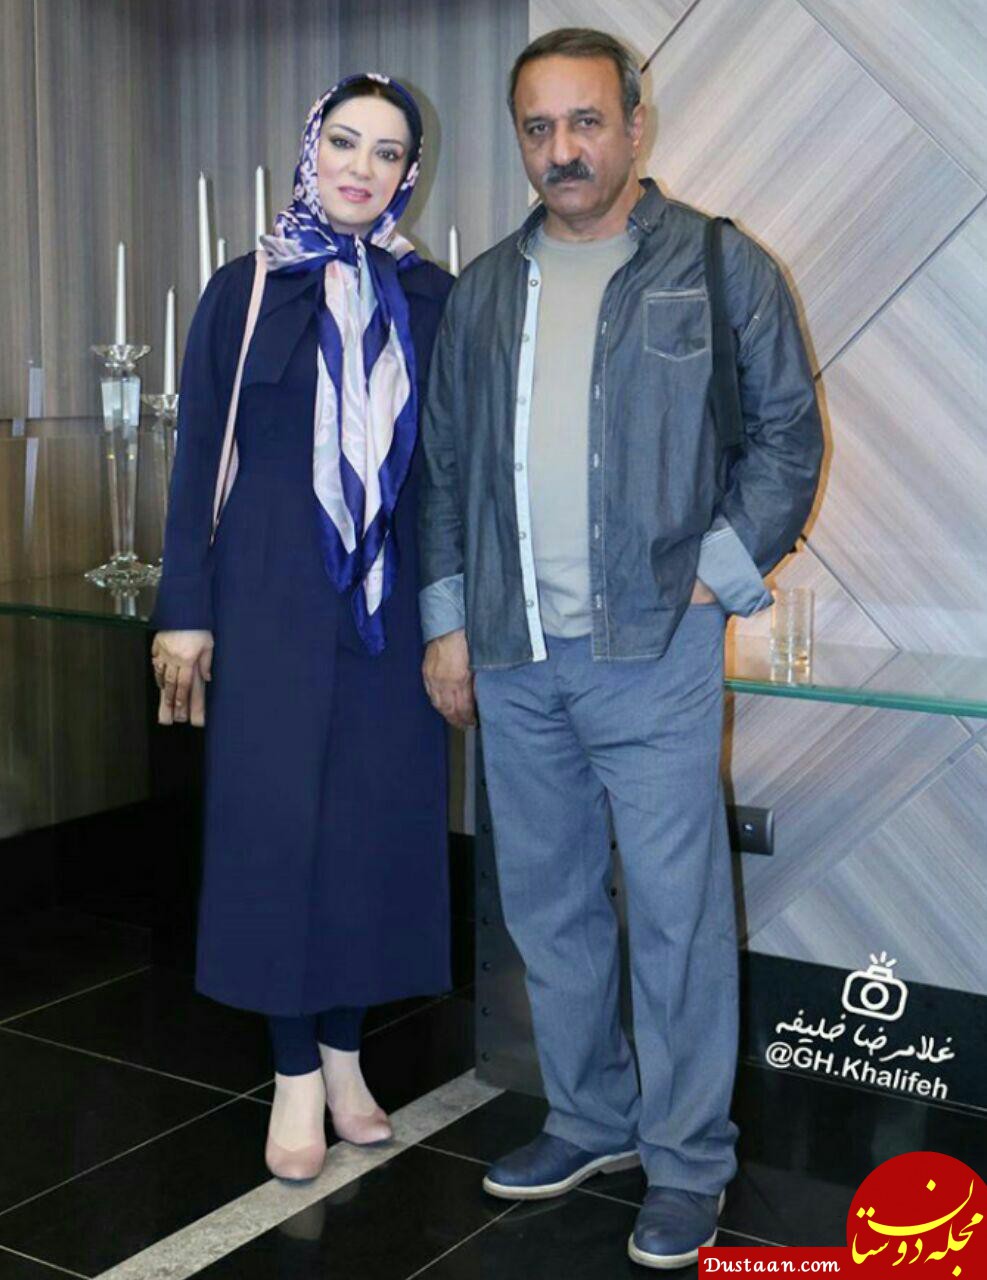 www.dustaan.com-بیوگرافی و عکس های علی اسیوند و همسرش حمیرا ریاضی